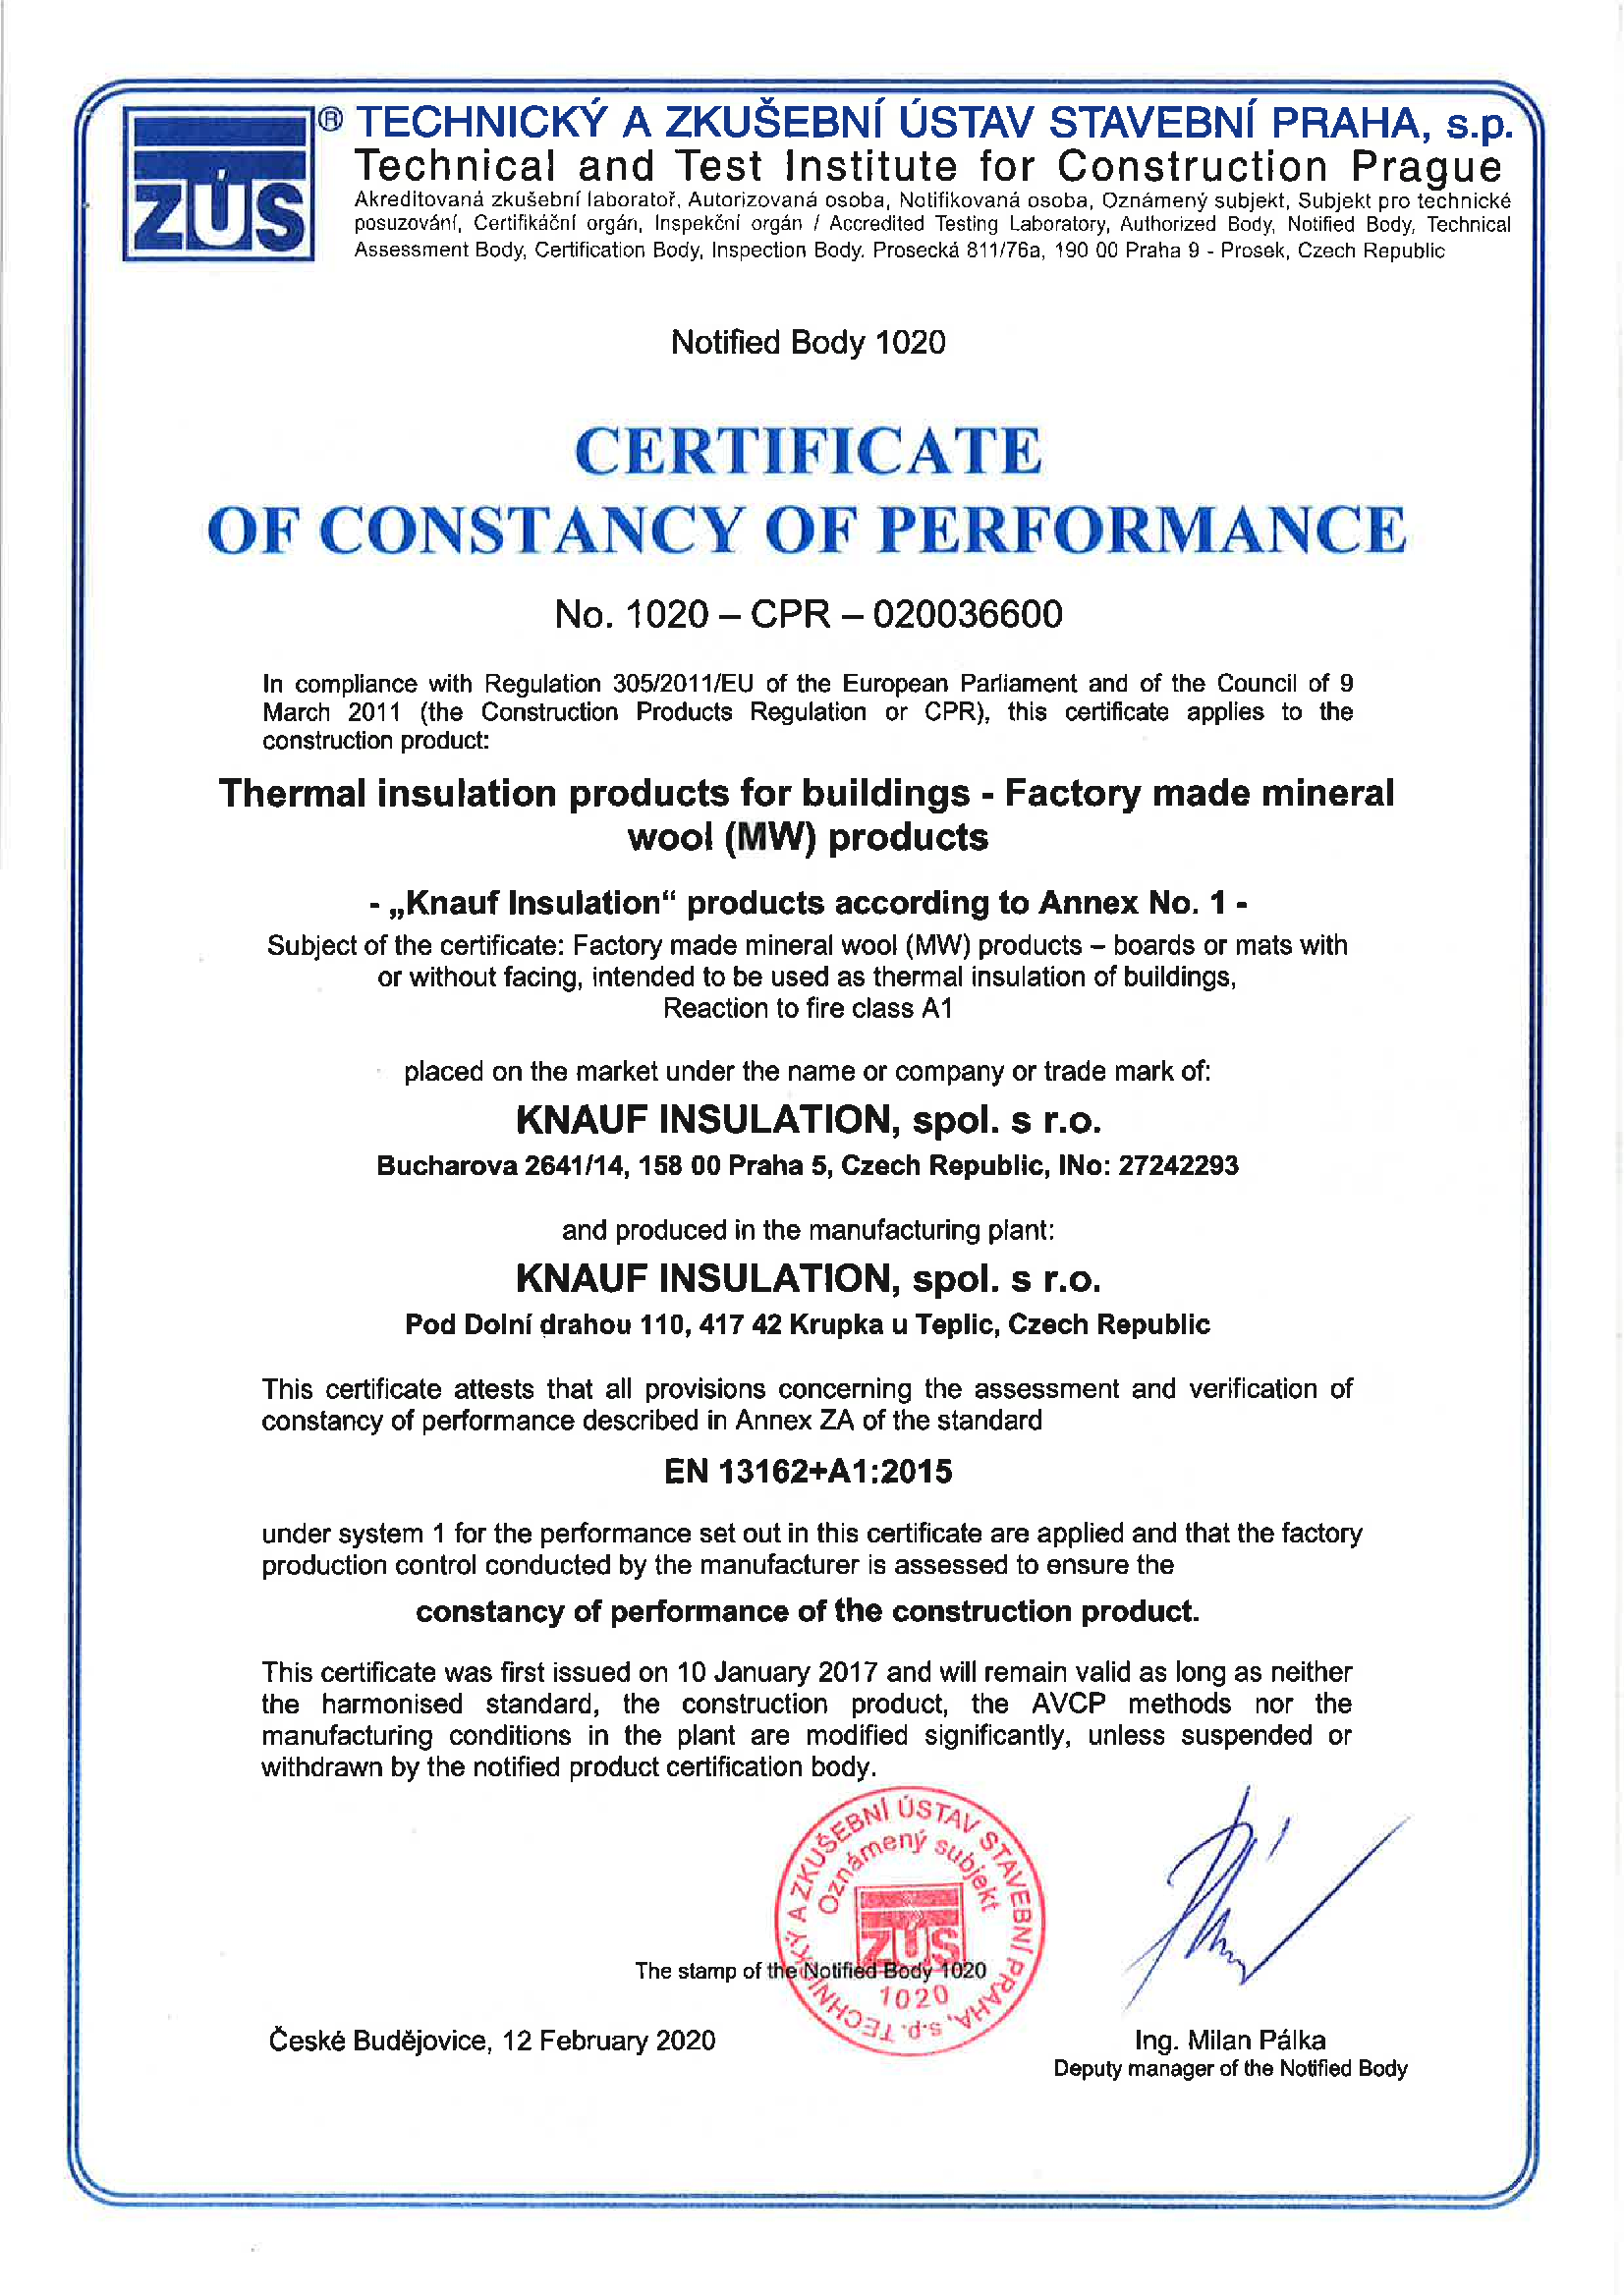 Certificat de performanta al produselor 0200366600